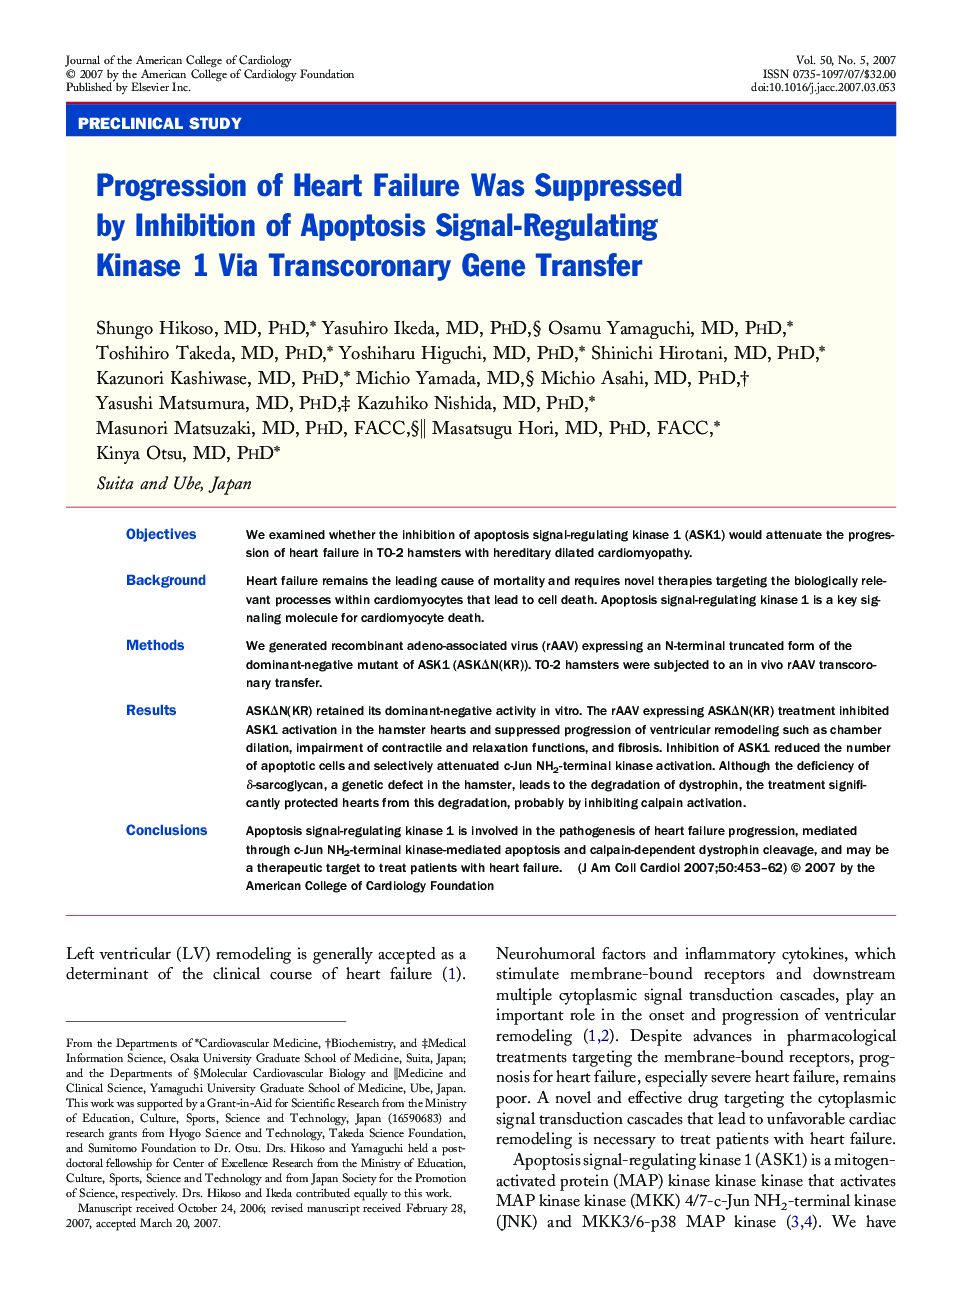 Progression of Heart Failure Was Suppressed by Inhibition of Apoptosis Signal-Regulating Kinase 1 Via Transcoronary Gene Transfer 